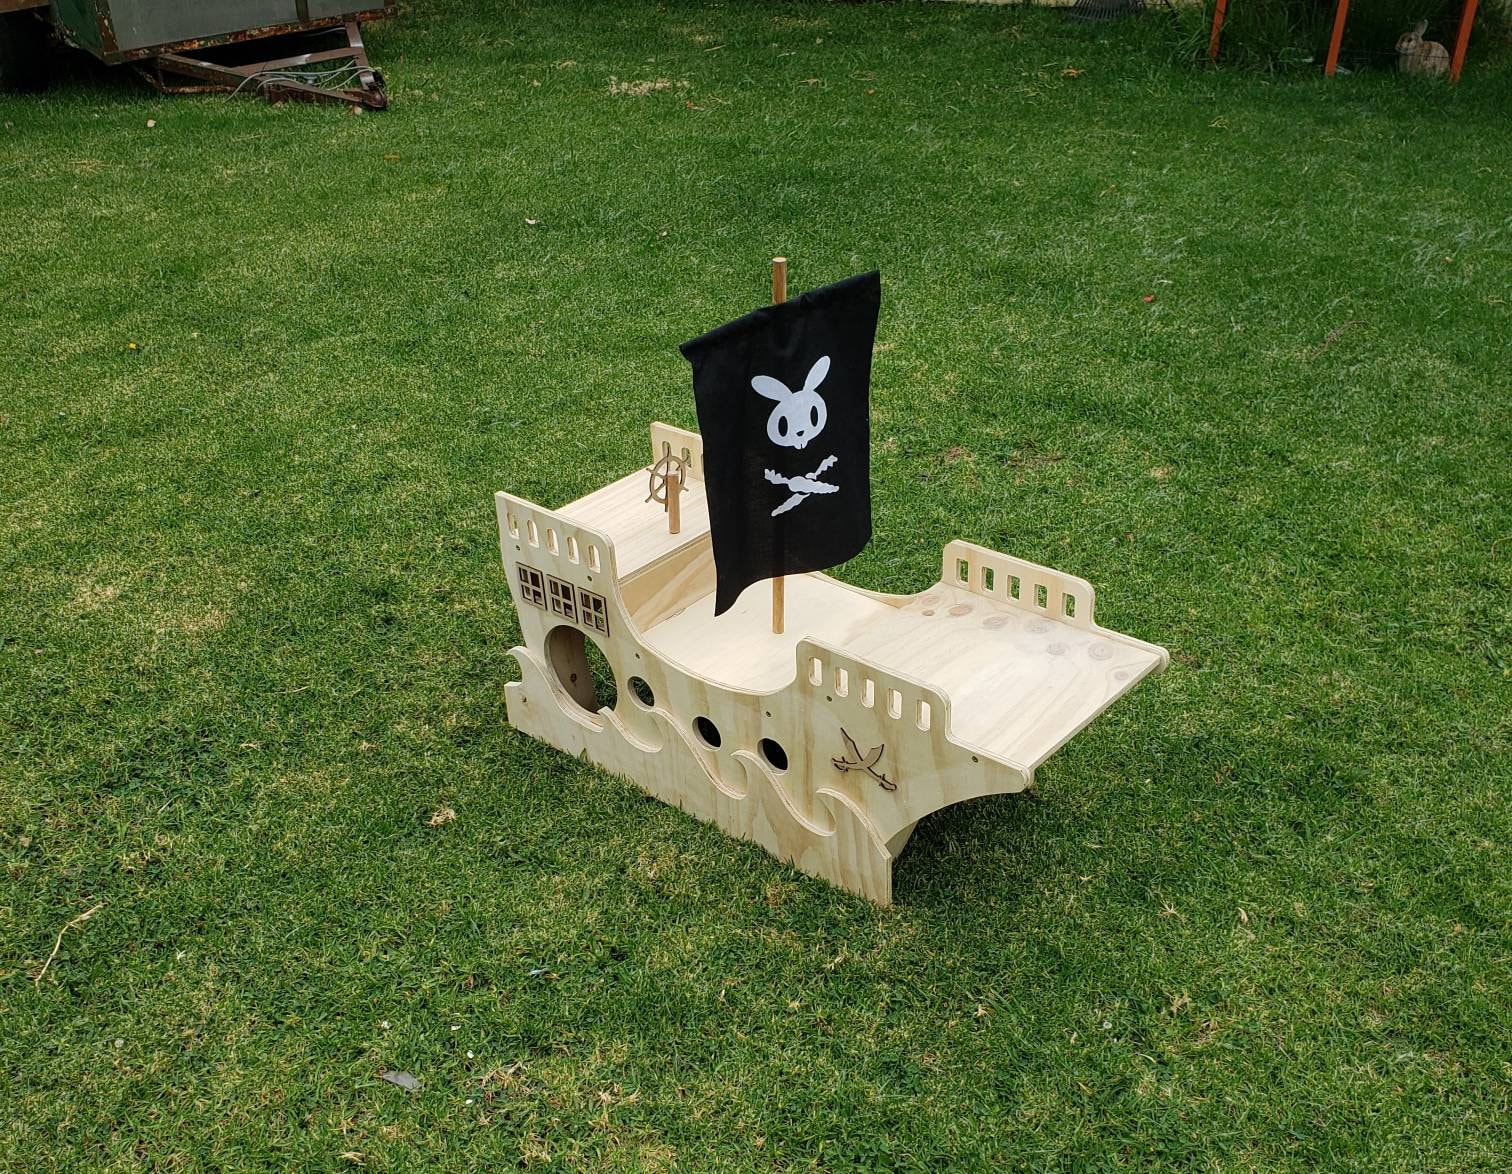 Pirate Ship, ebunny